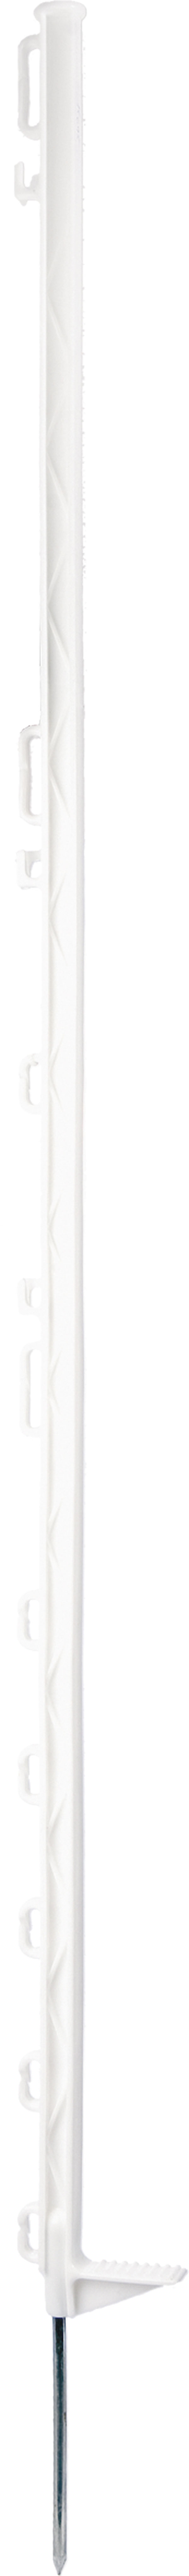 Muovitolppa TTP10 102cm DeLaval valkoinen